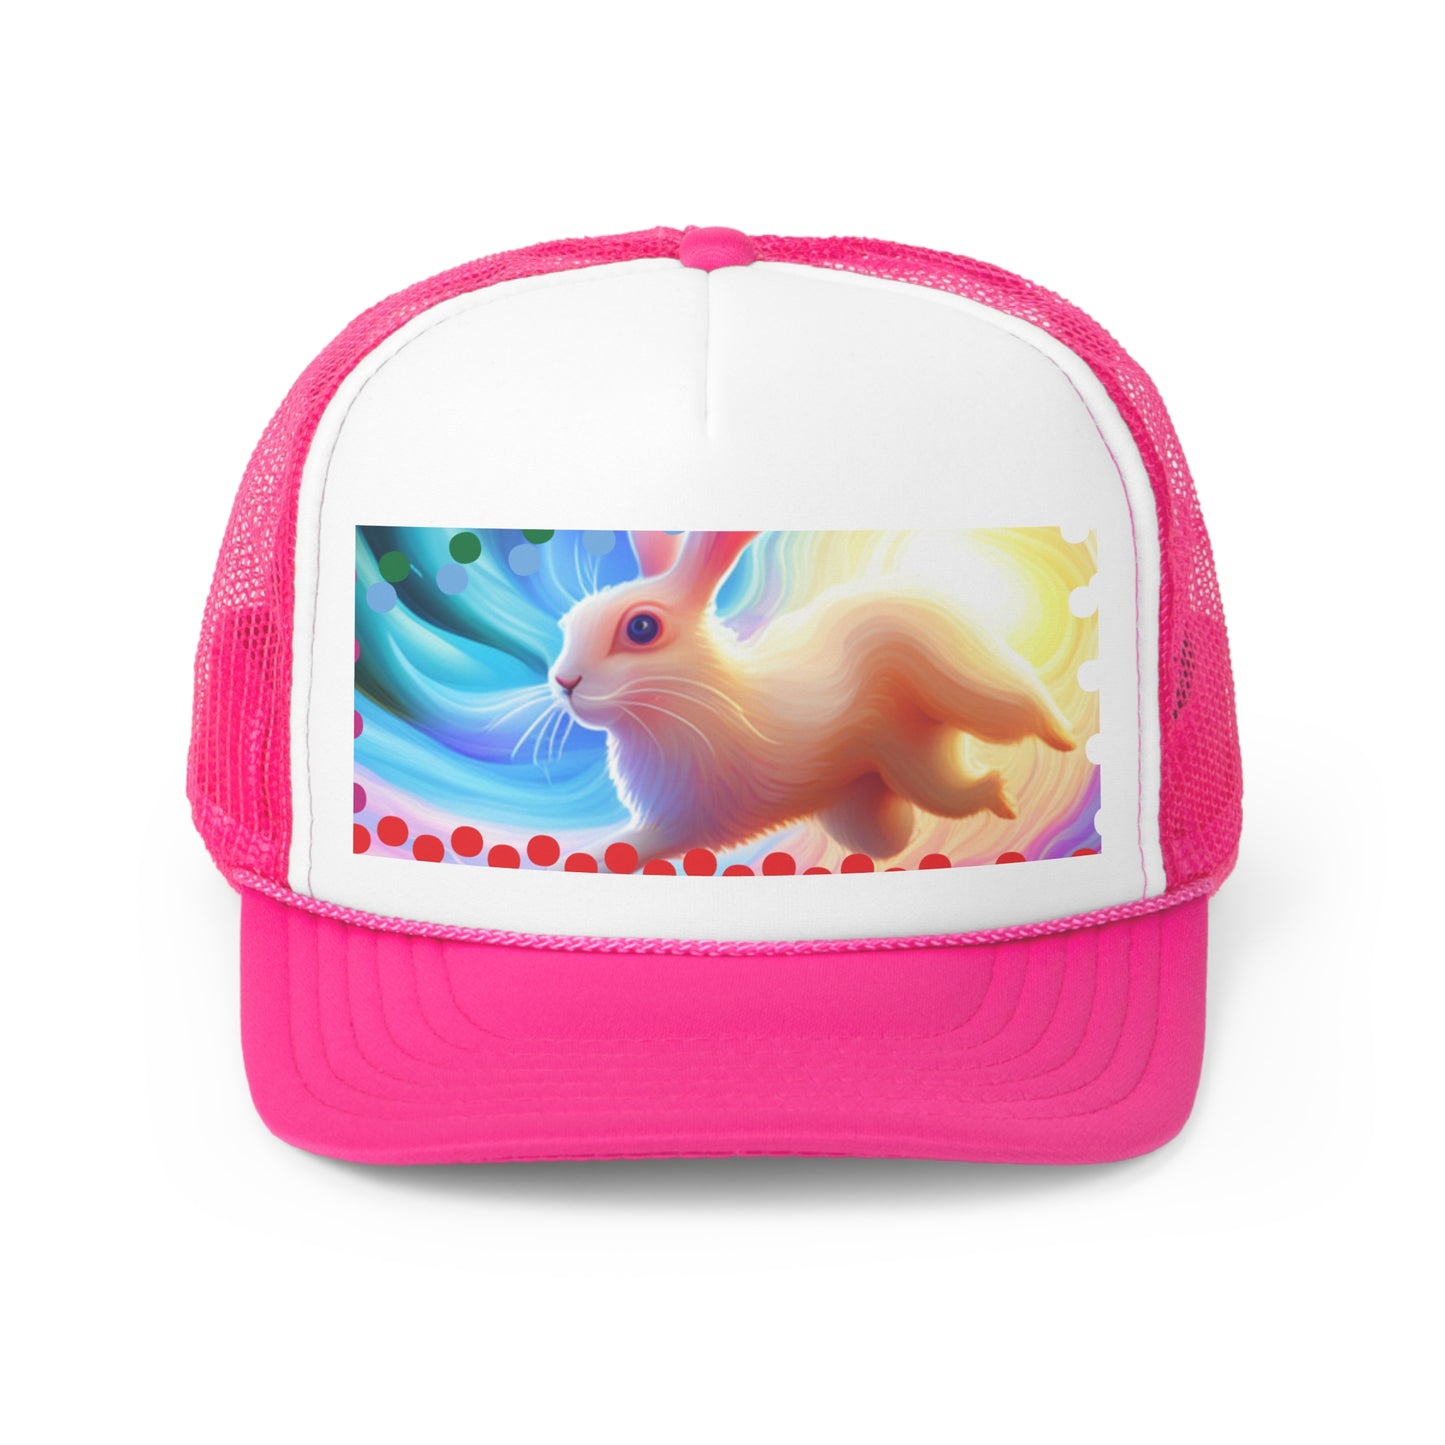 Bunny Hat